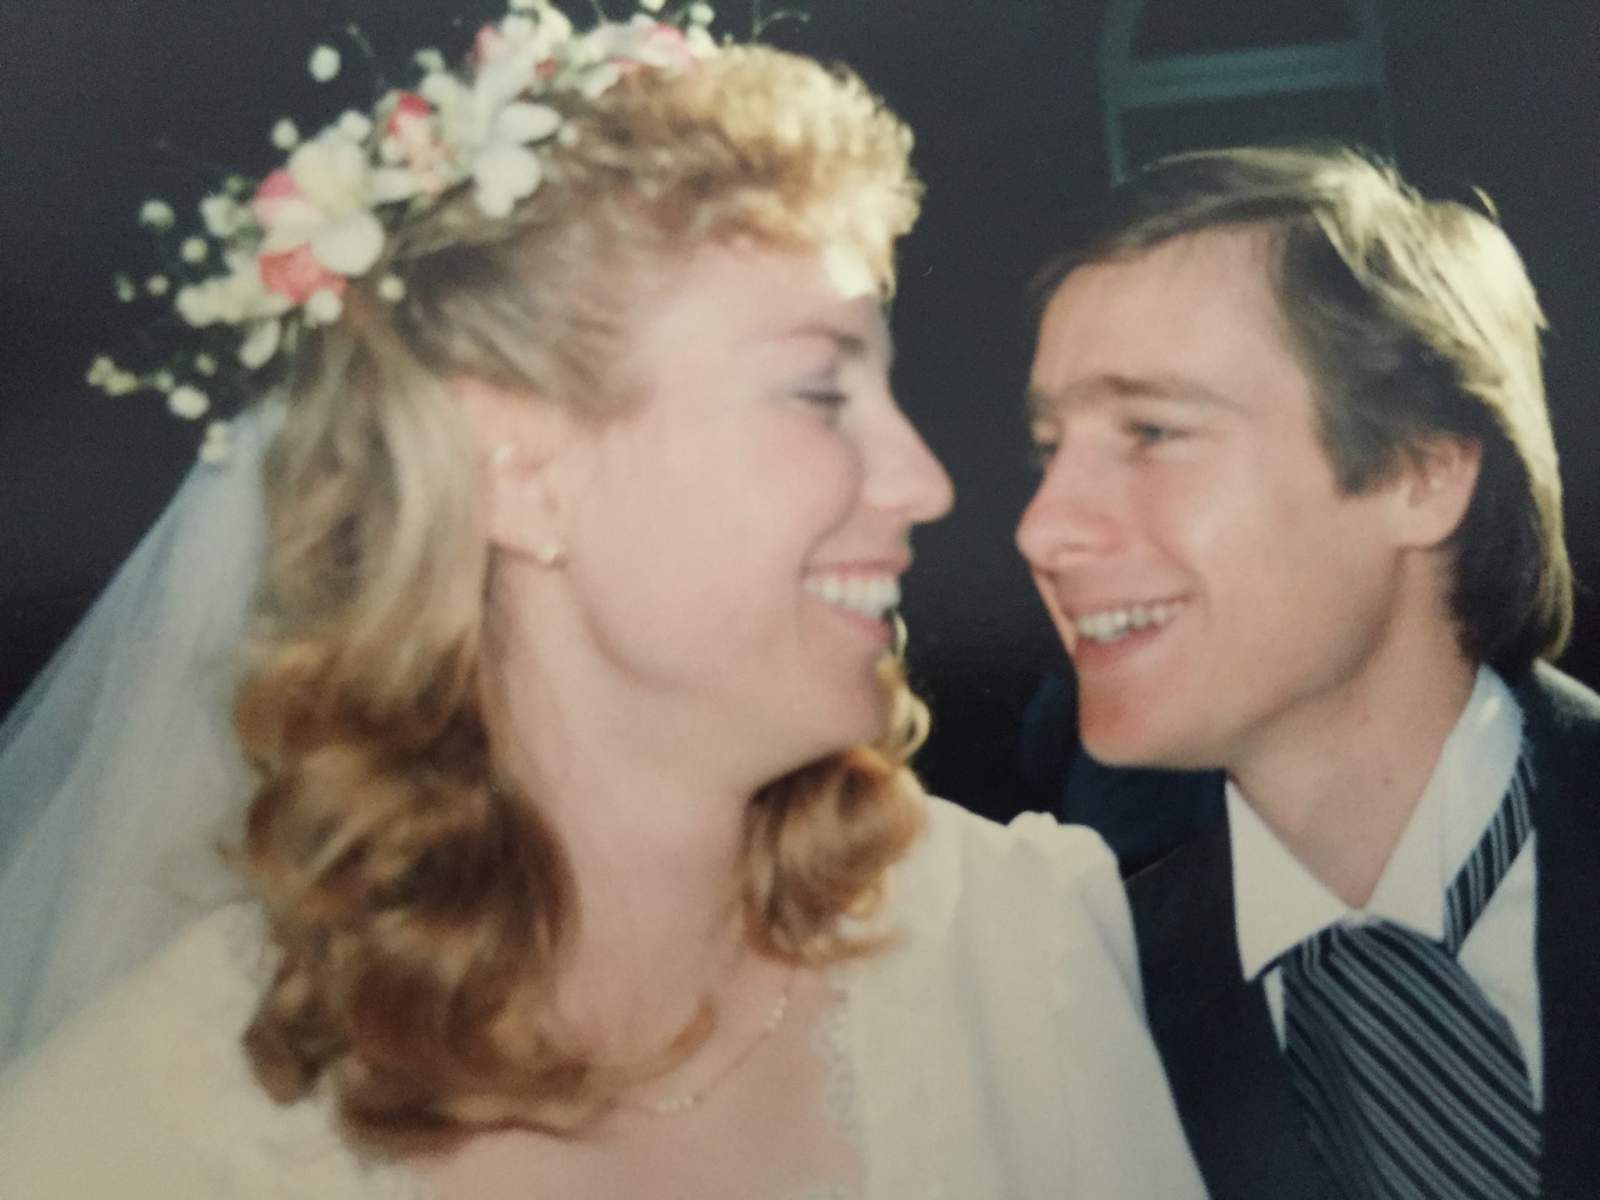 Wedding with Neville 1988